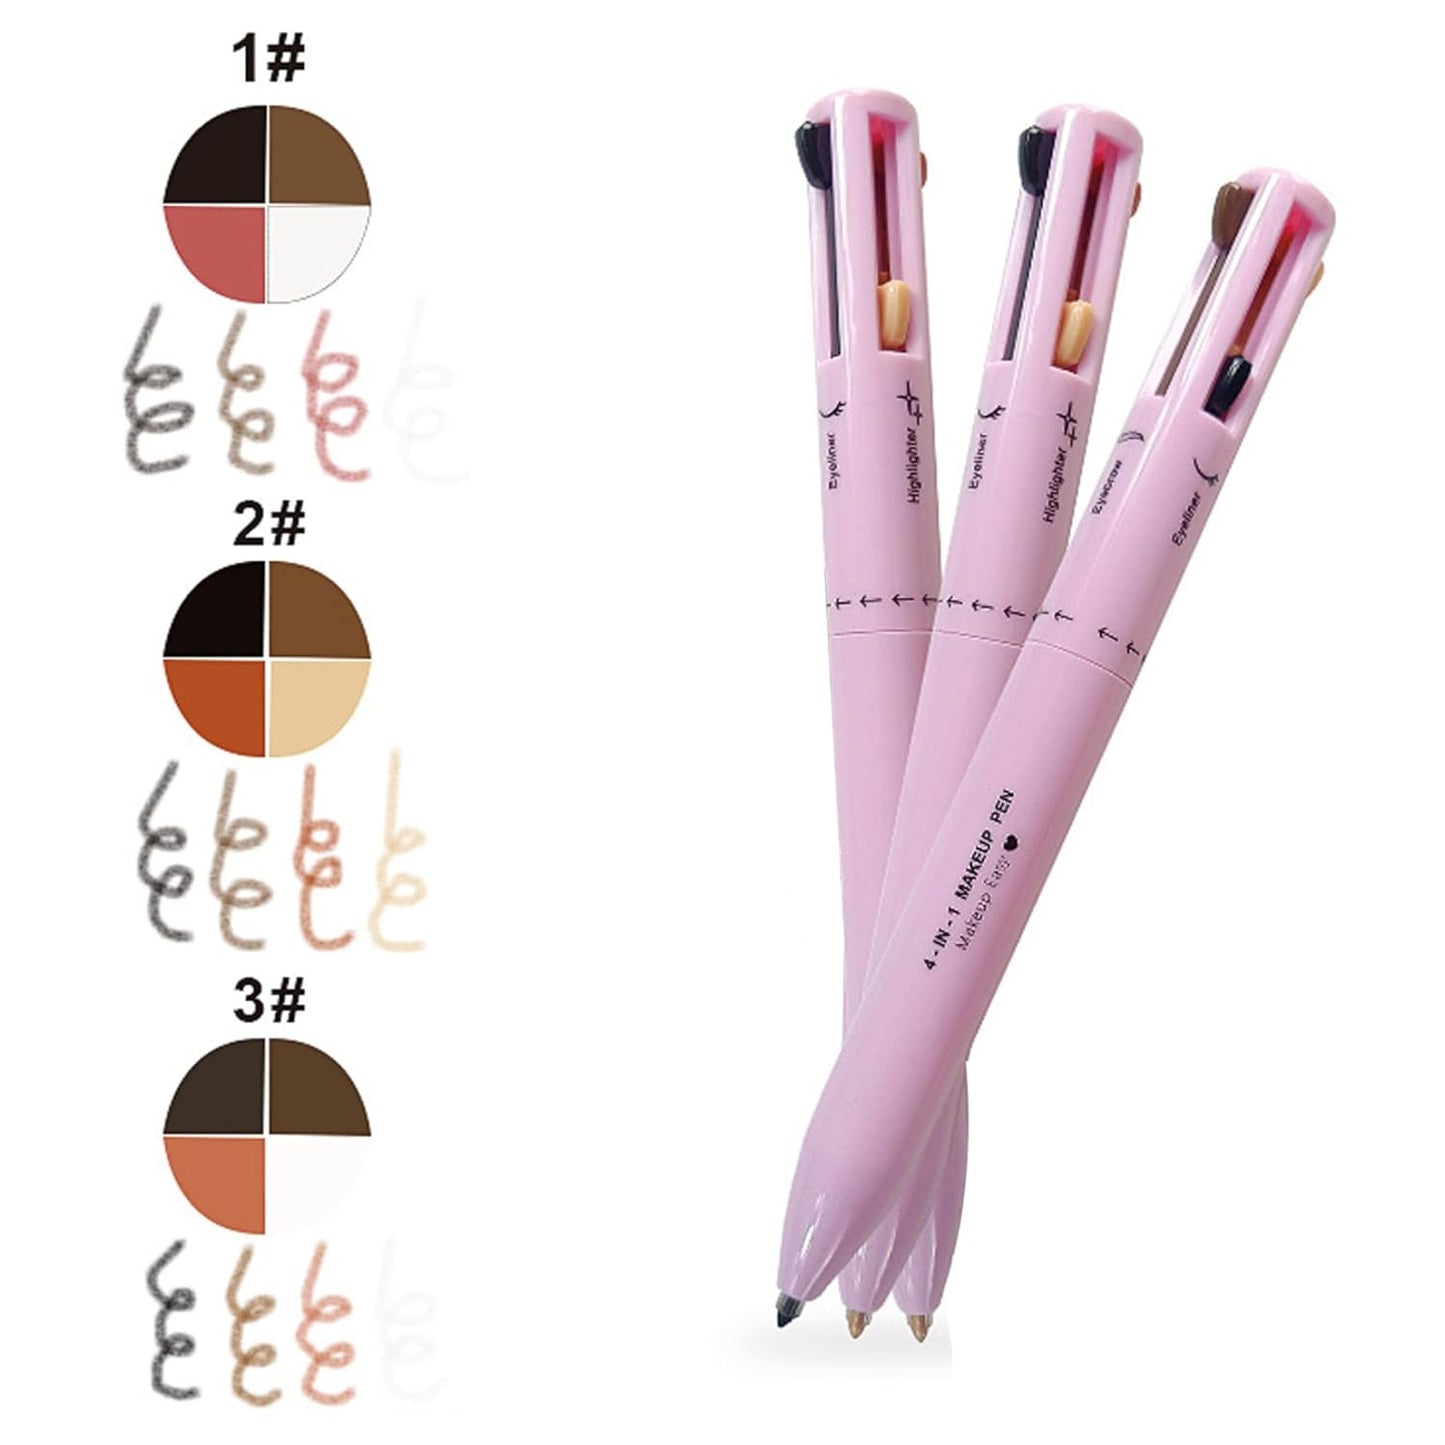 "4-in-1 Makeup Pen: Eyeshadow, Eyeliner, Eyebrow, Highlighter"